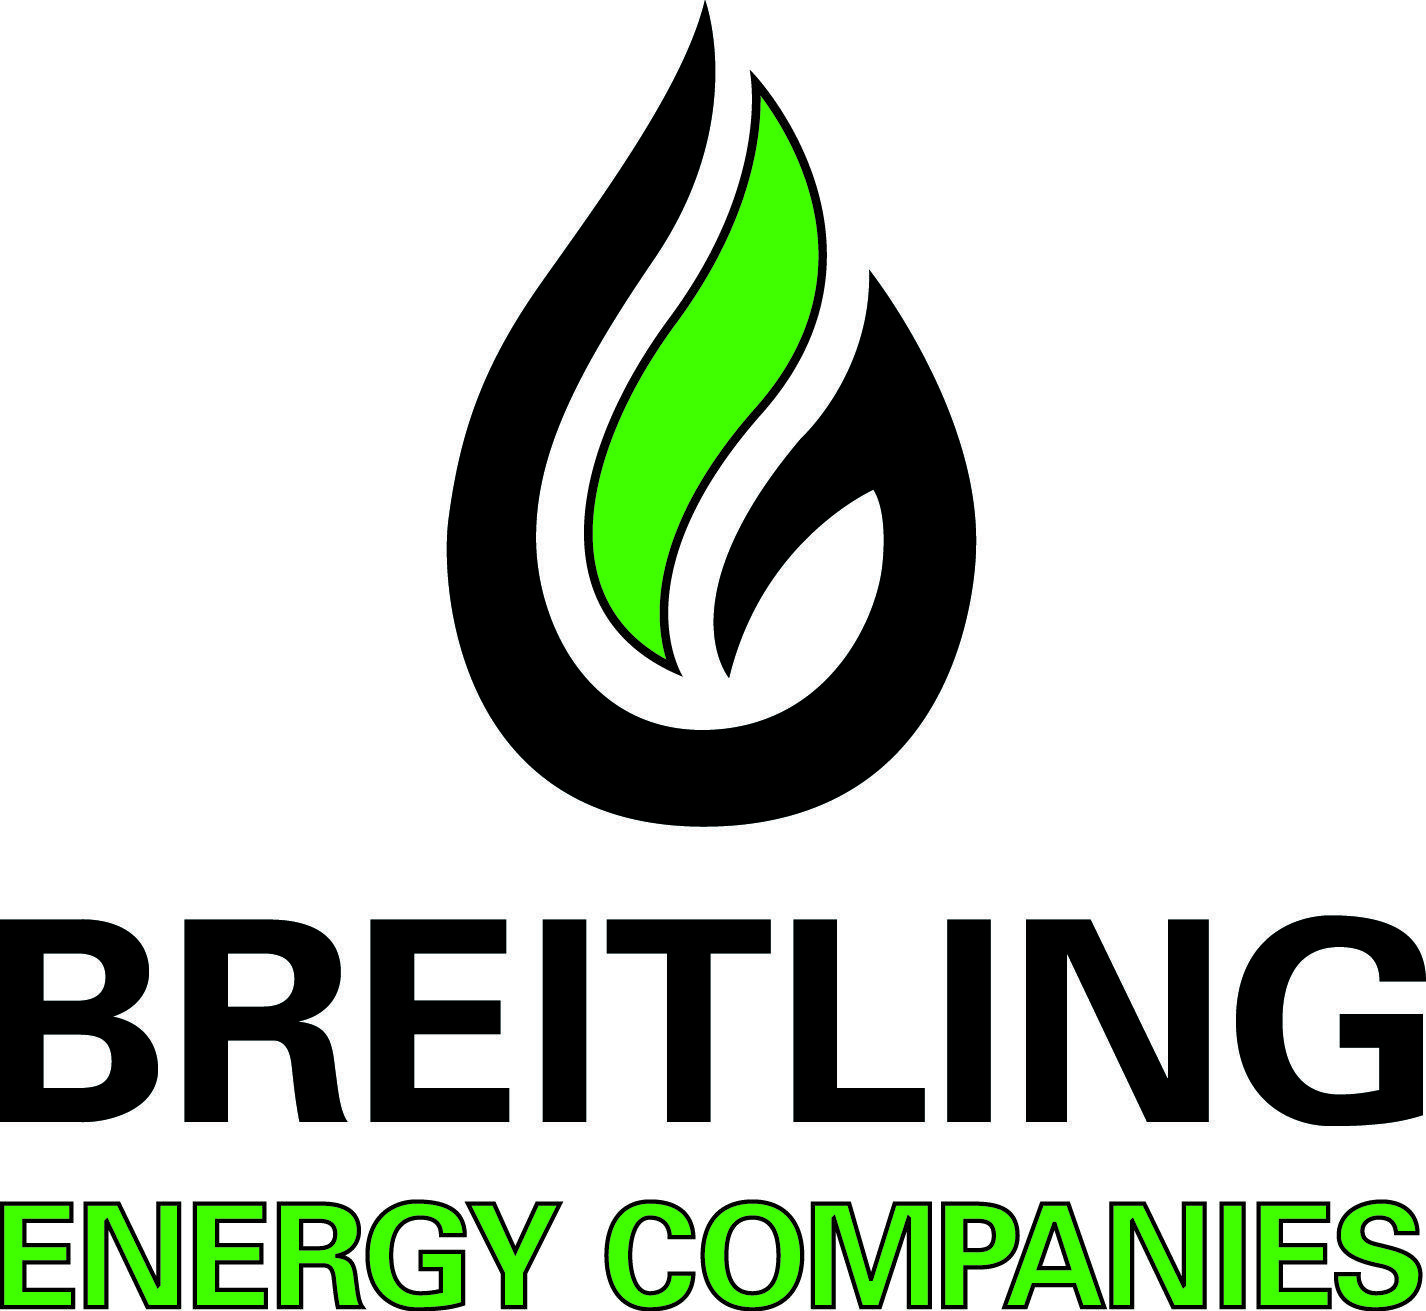 Service Oil Company Logo - Oil and gas company Logos